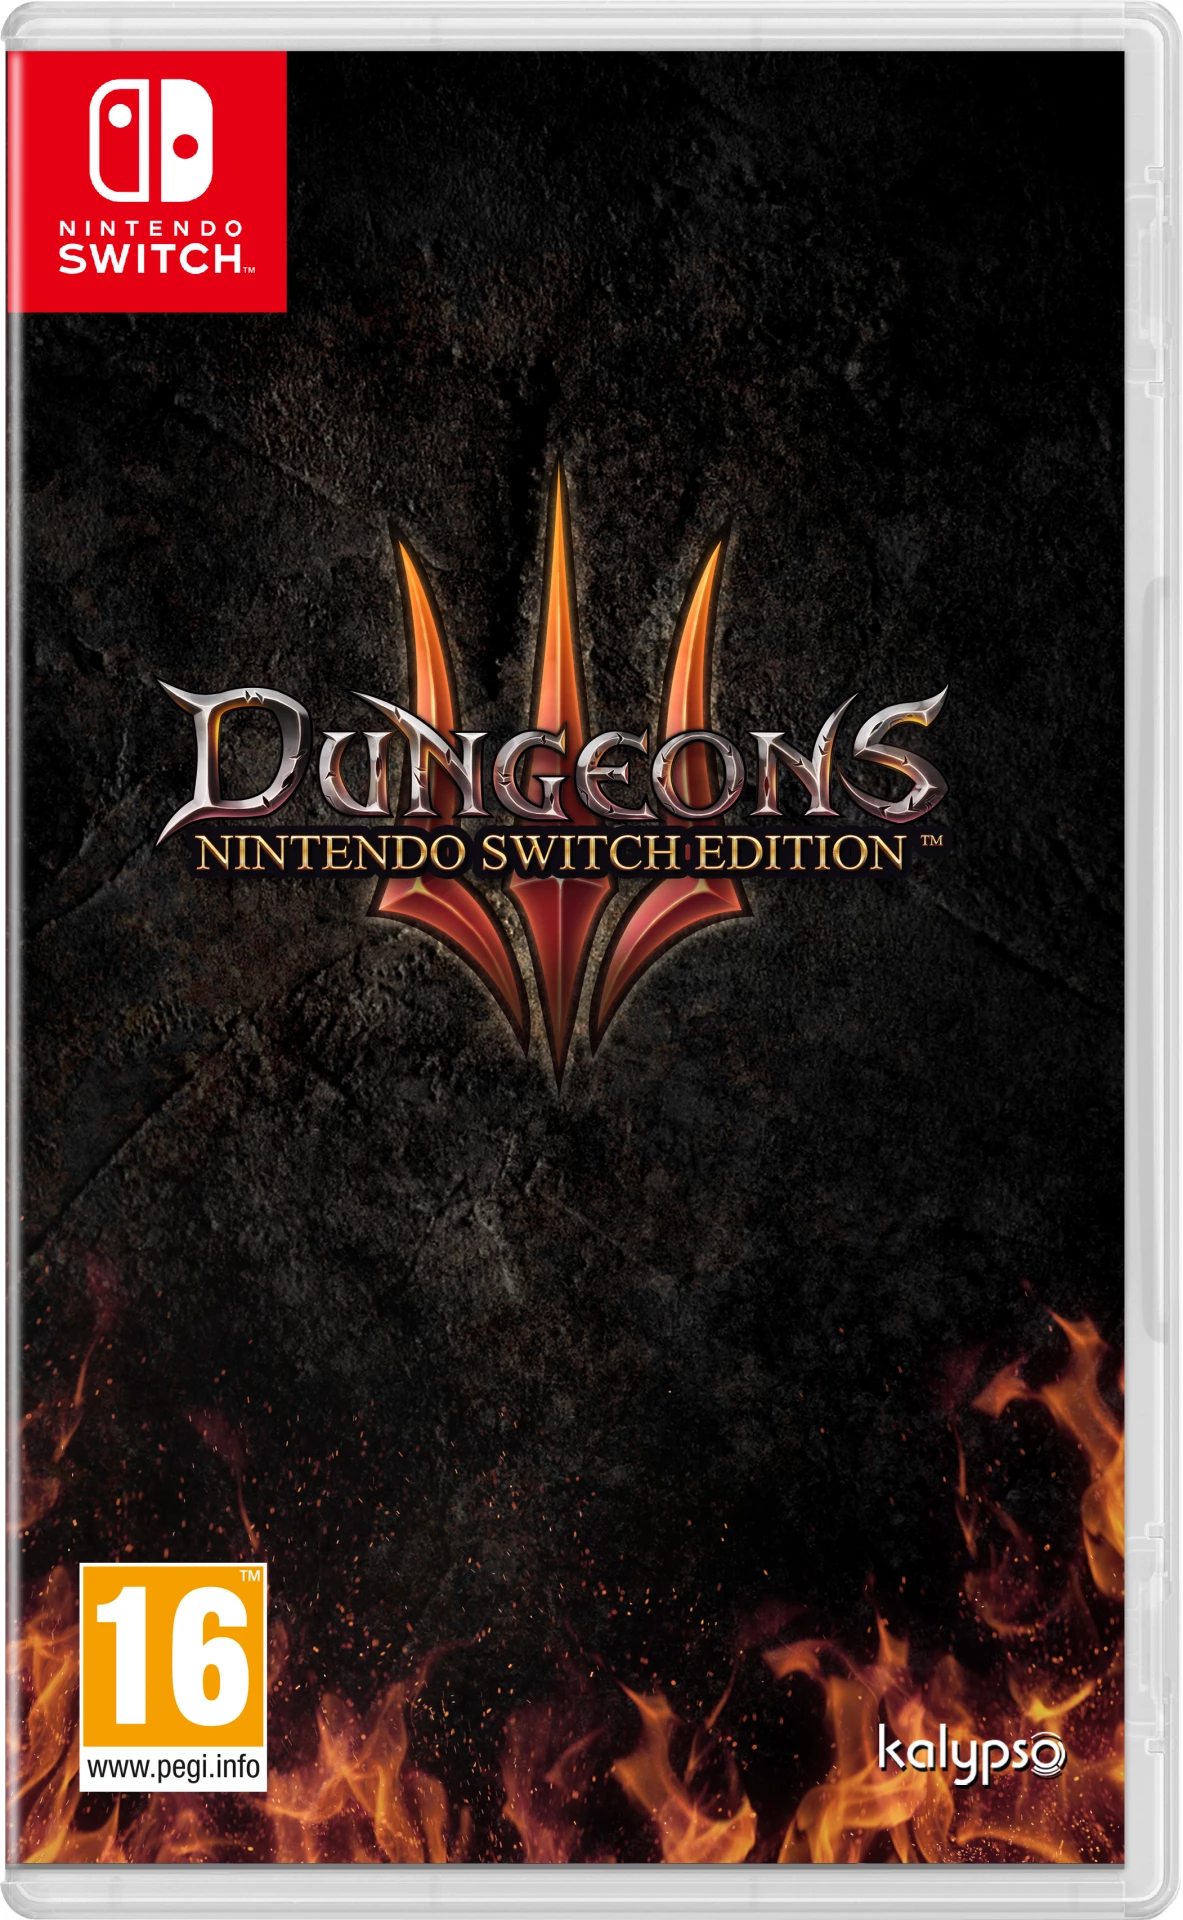 Dungeons III - Nintendo Switch Edition (Switch), Kalypso Entertainment